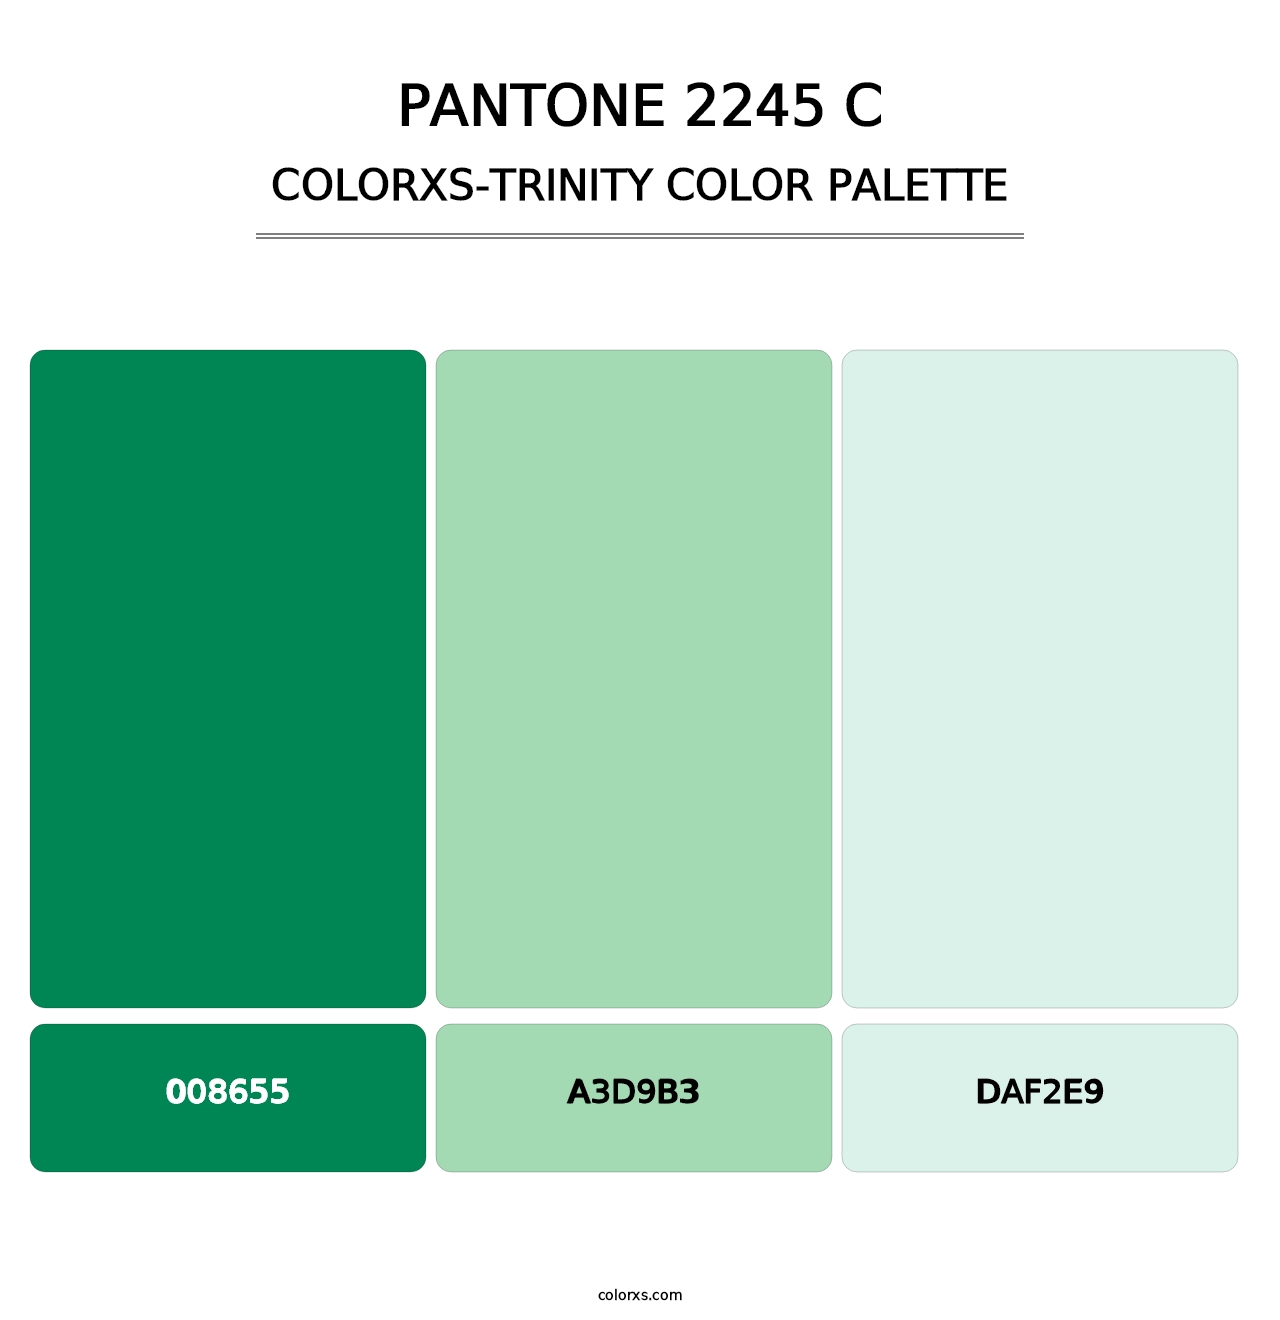 PANTONE 2245 C - Colorxs Trinity Palette